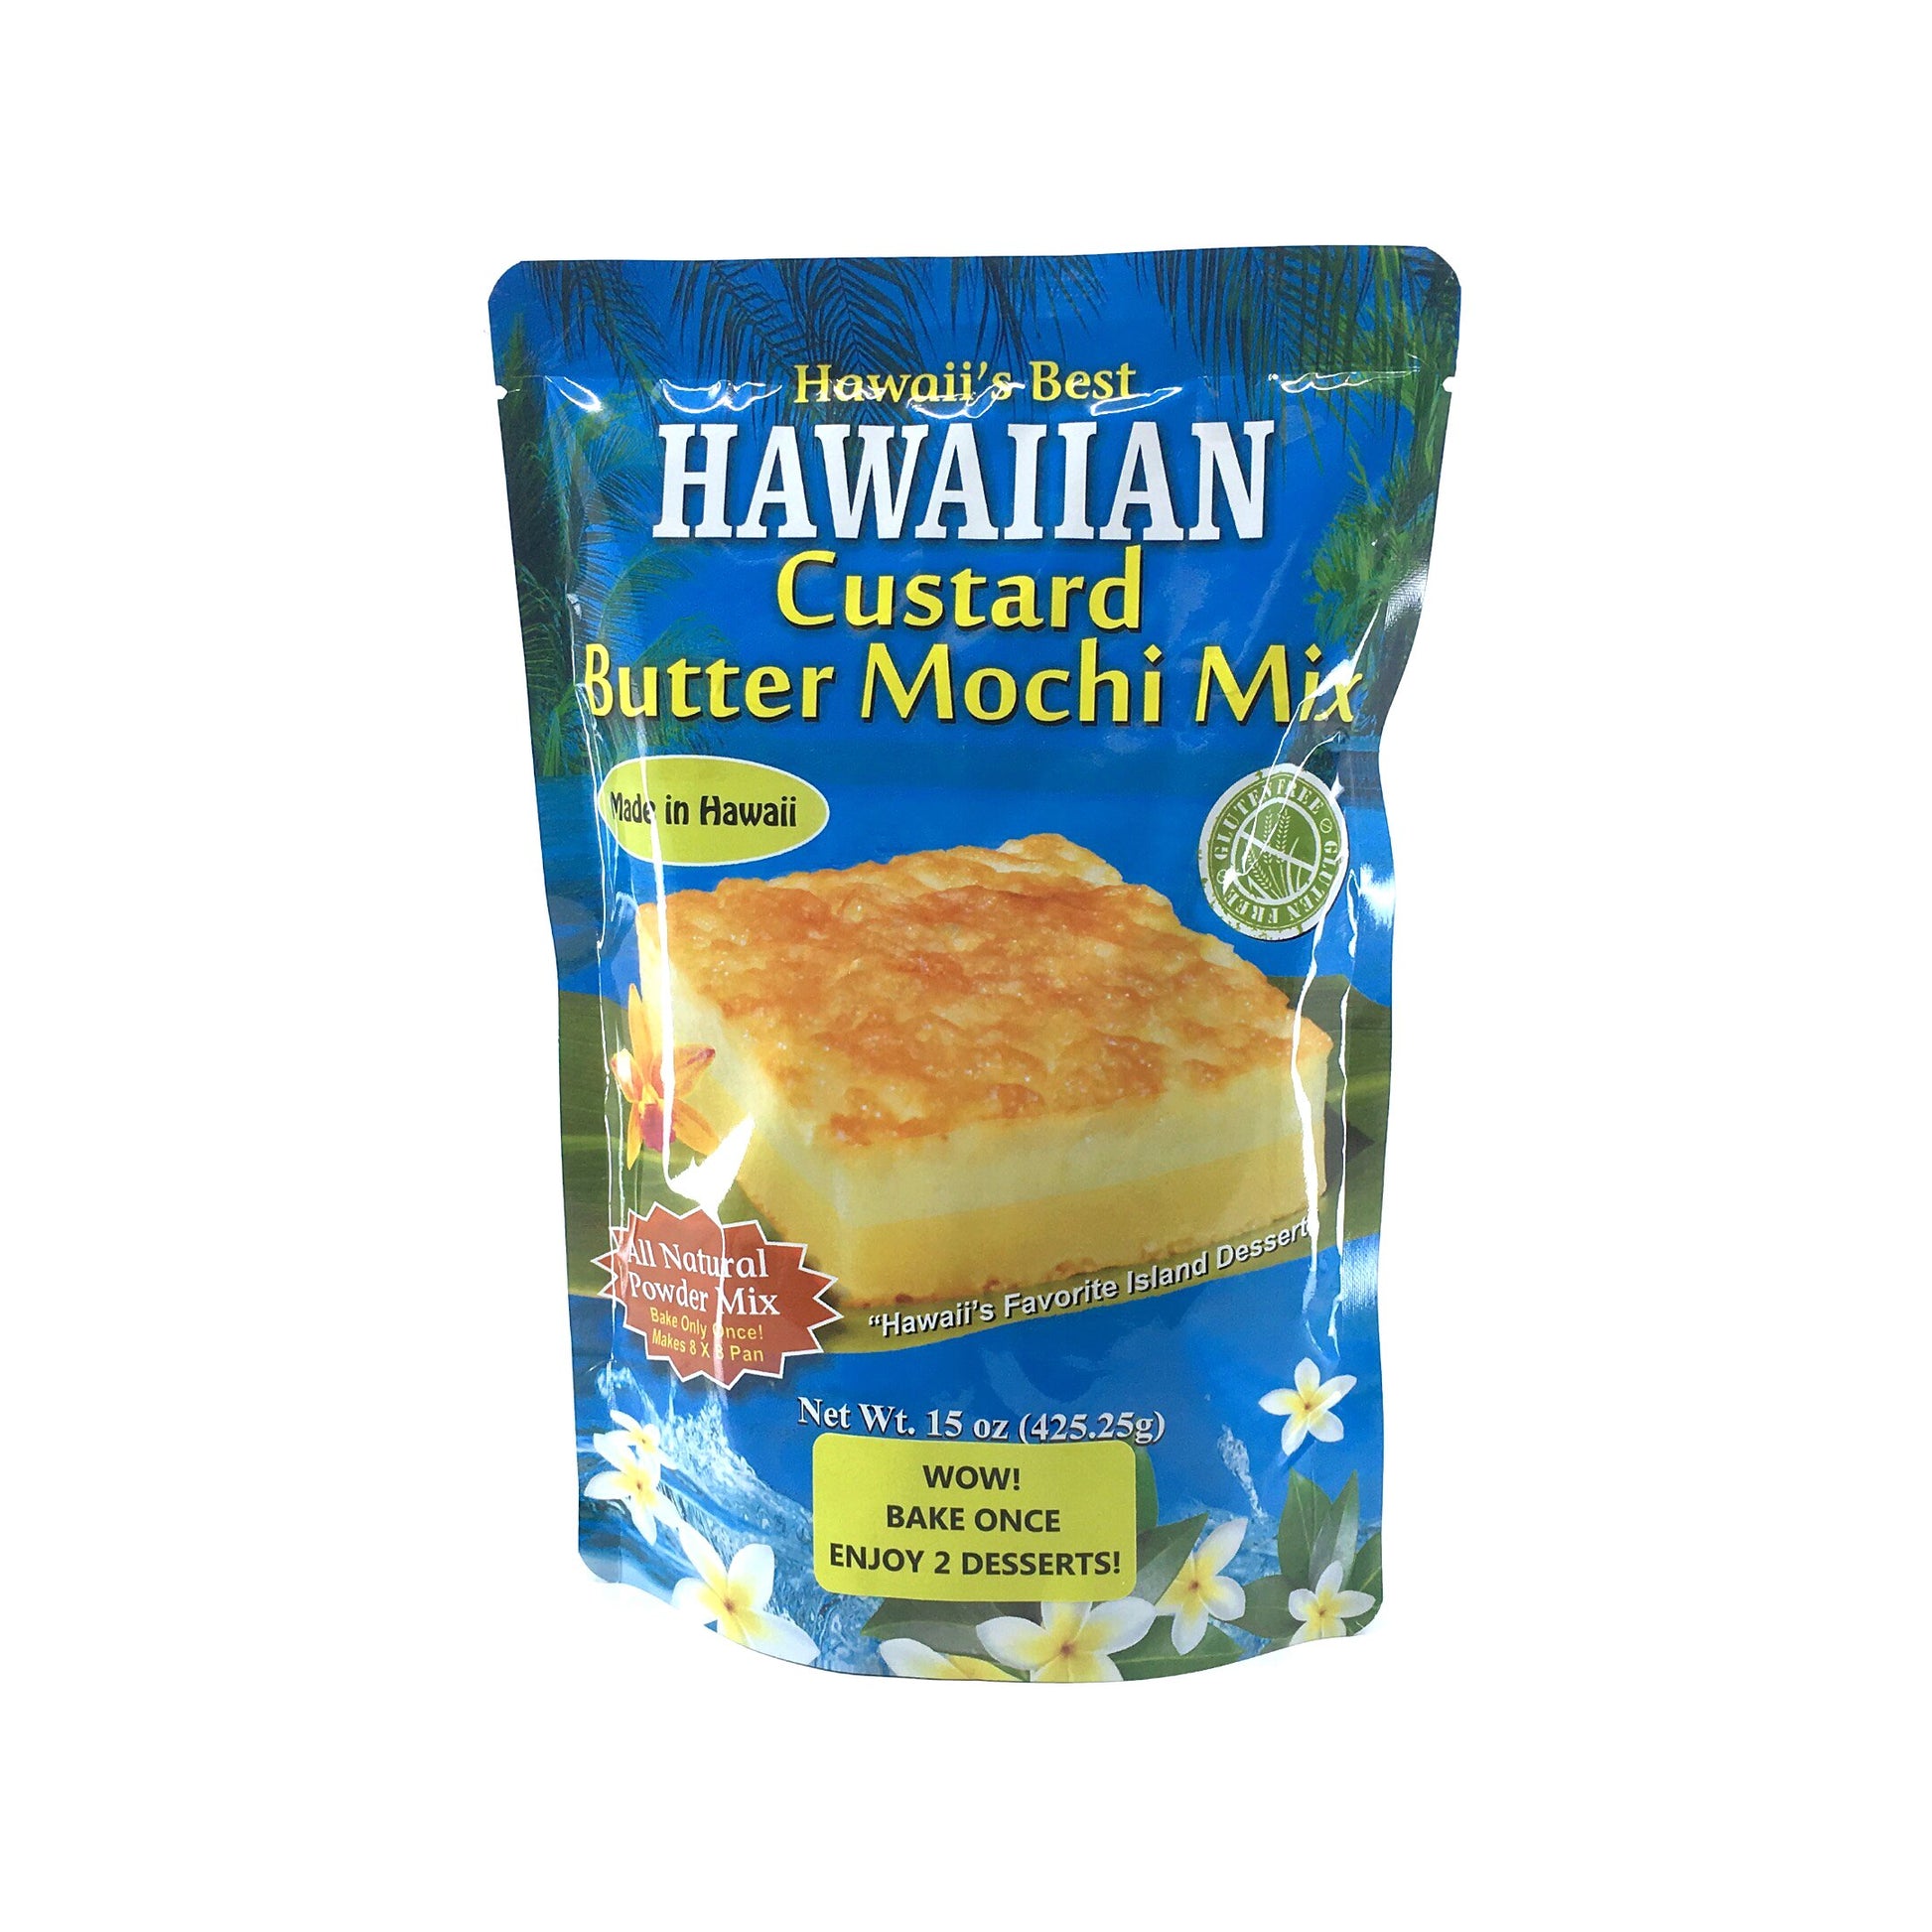 Hawaii's Best Custard Butter Mochi Mix 15 oz - Wholesale Unlimited Inc.